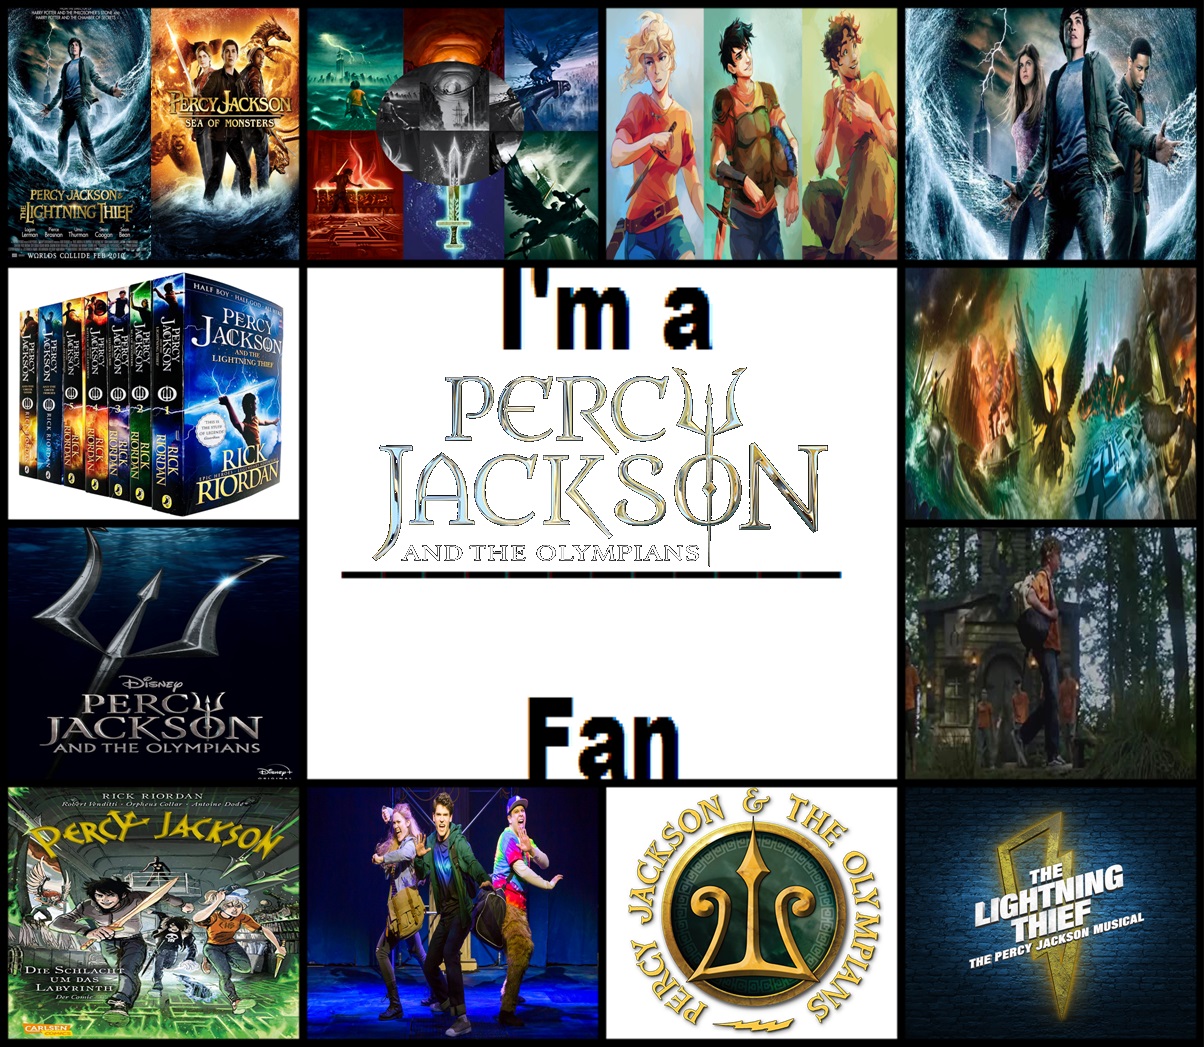 Percy Jackson and the Olympians on fav-book-fan-art - DeviantArt